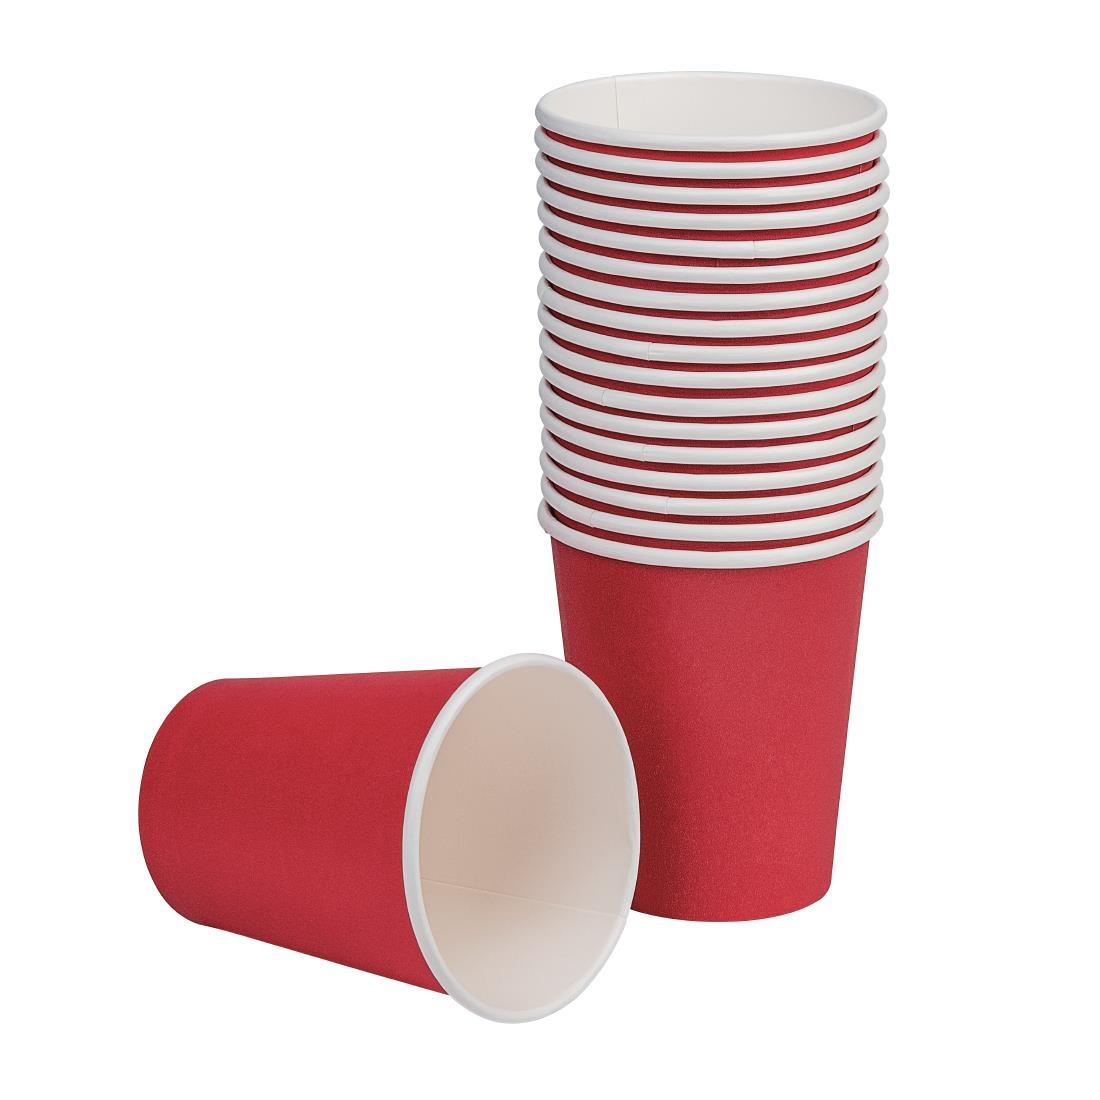 Fiesta Recyclable Single Wall Takeaway Coffee Cups Red 225ml / 8oz (Pack of 1000) - GP409  - 2